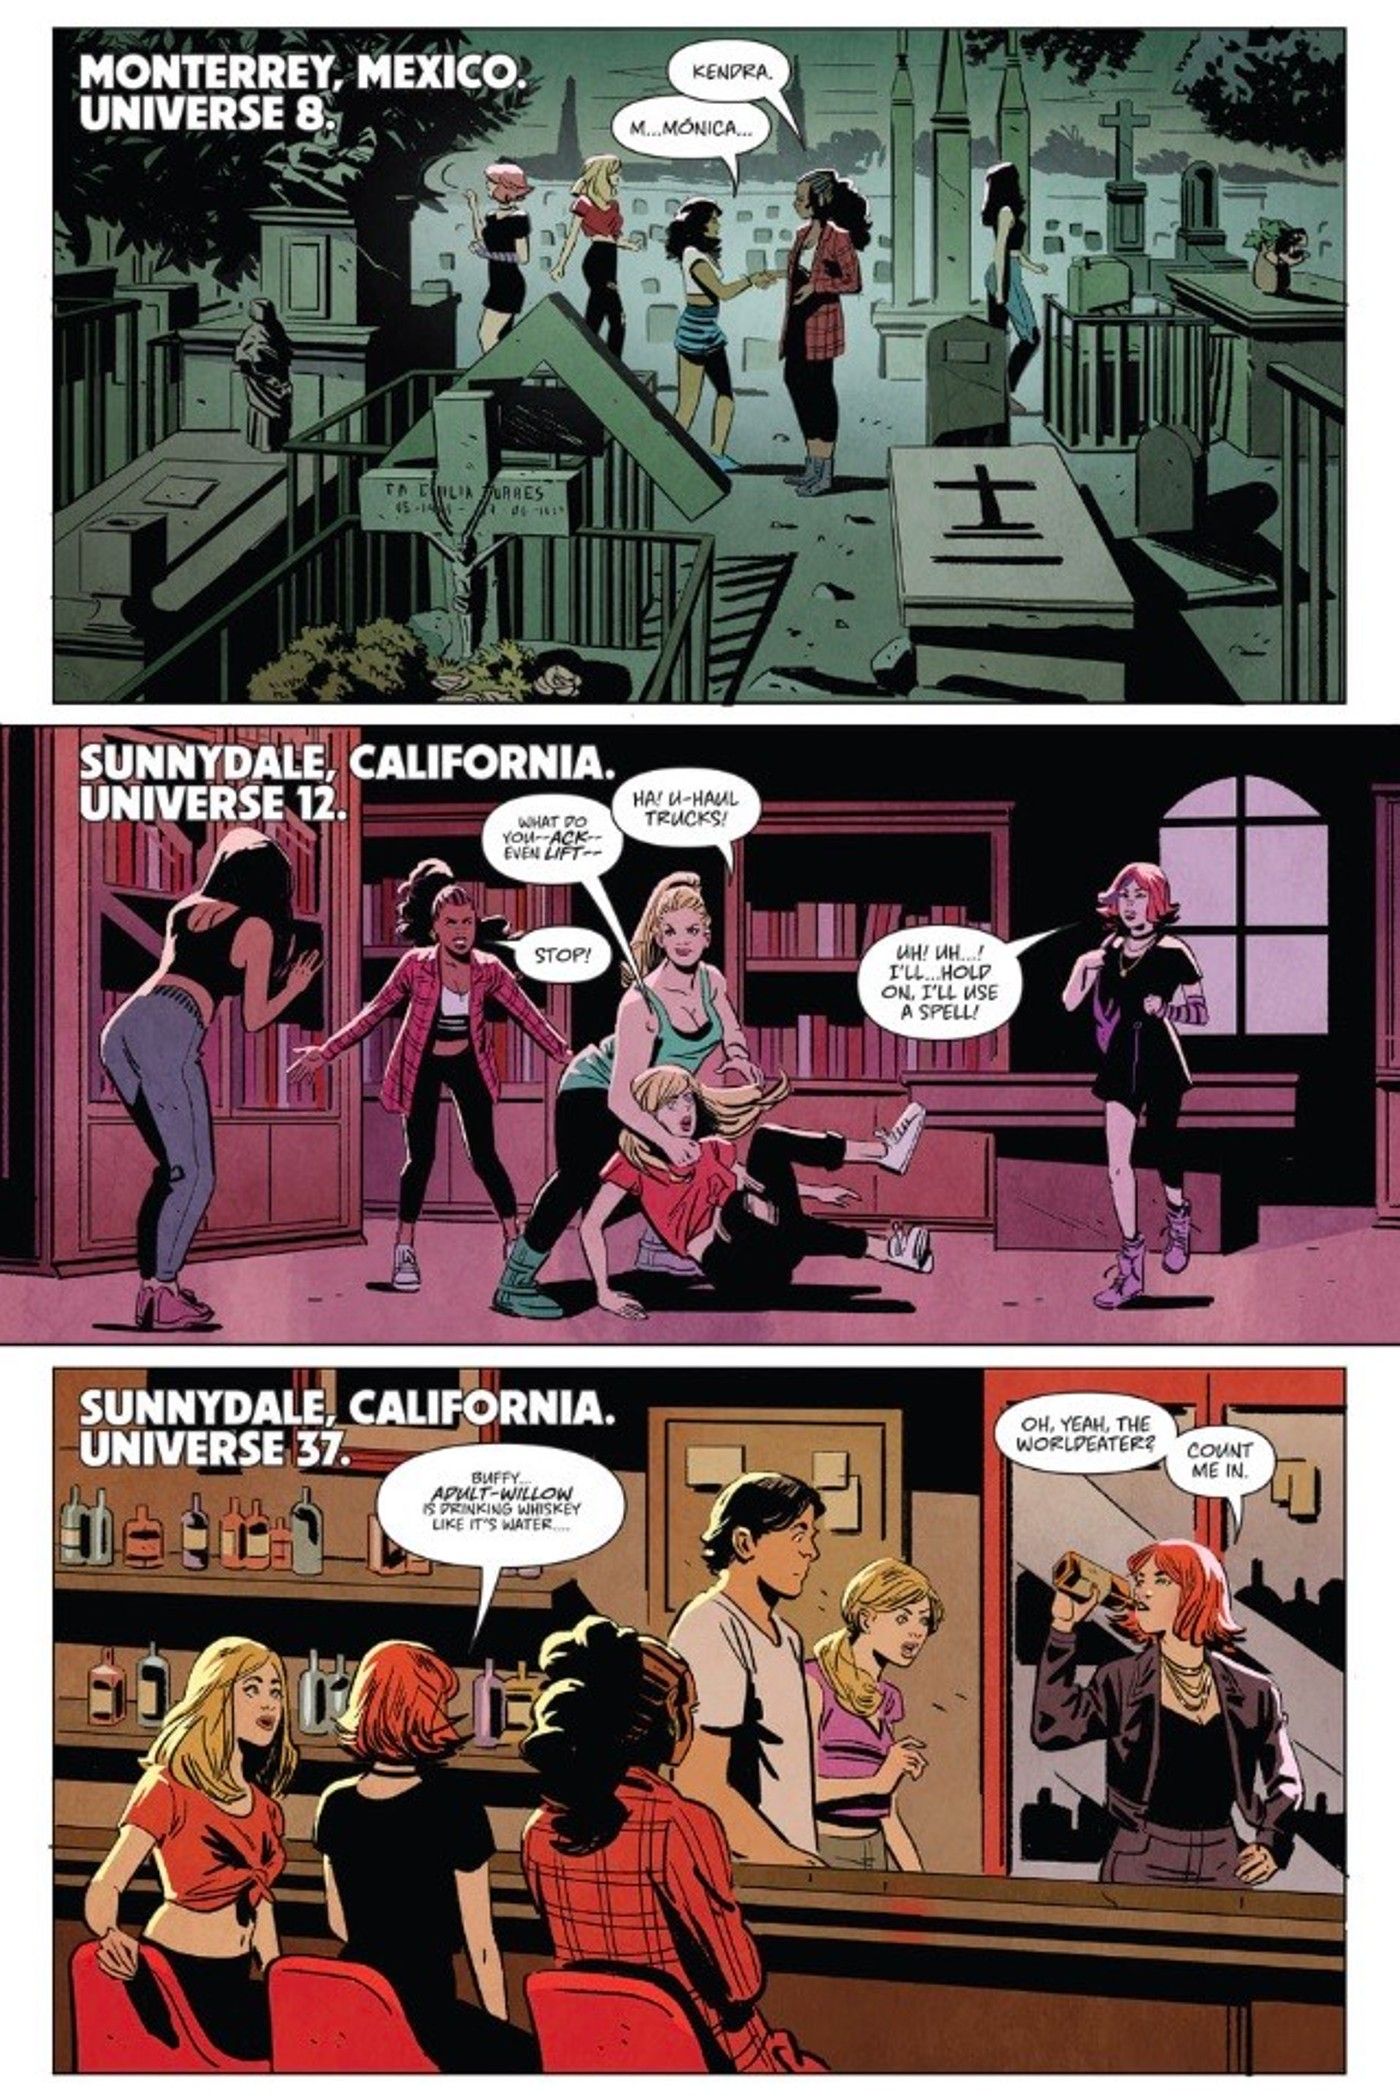 Buffy the Vampire Slayer visits the Slayerverse multiverse